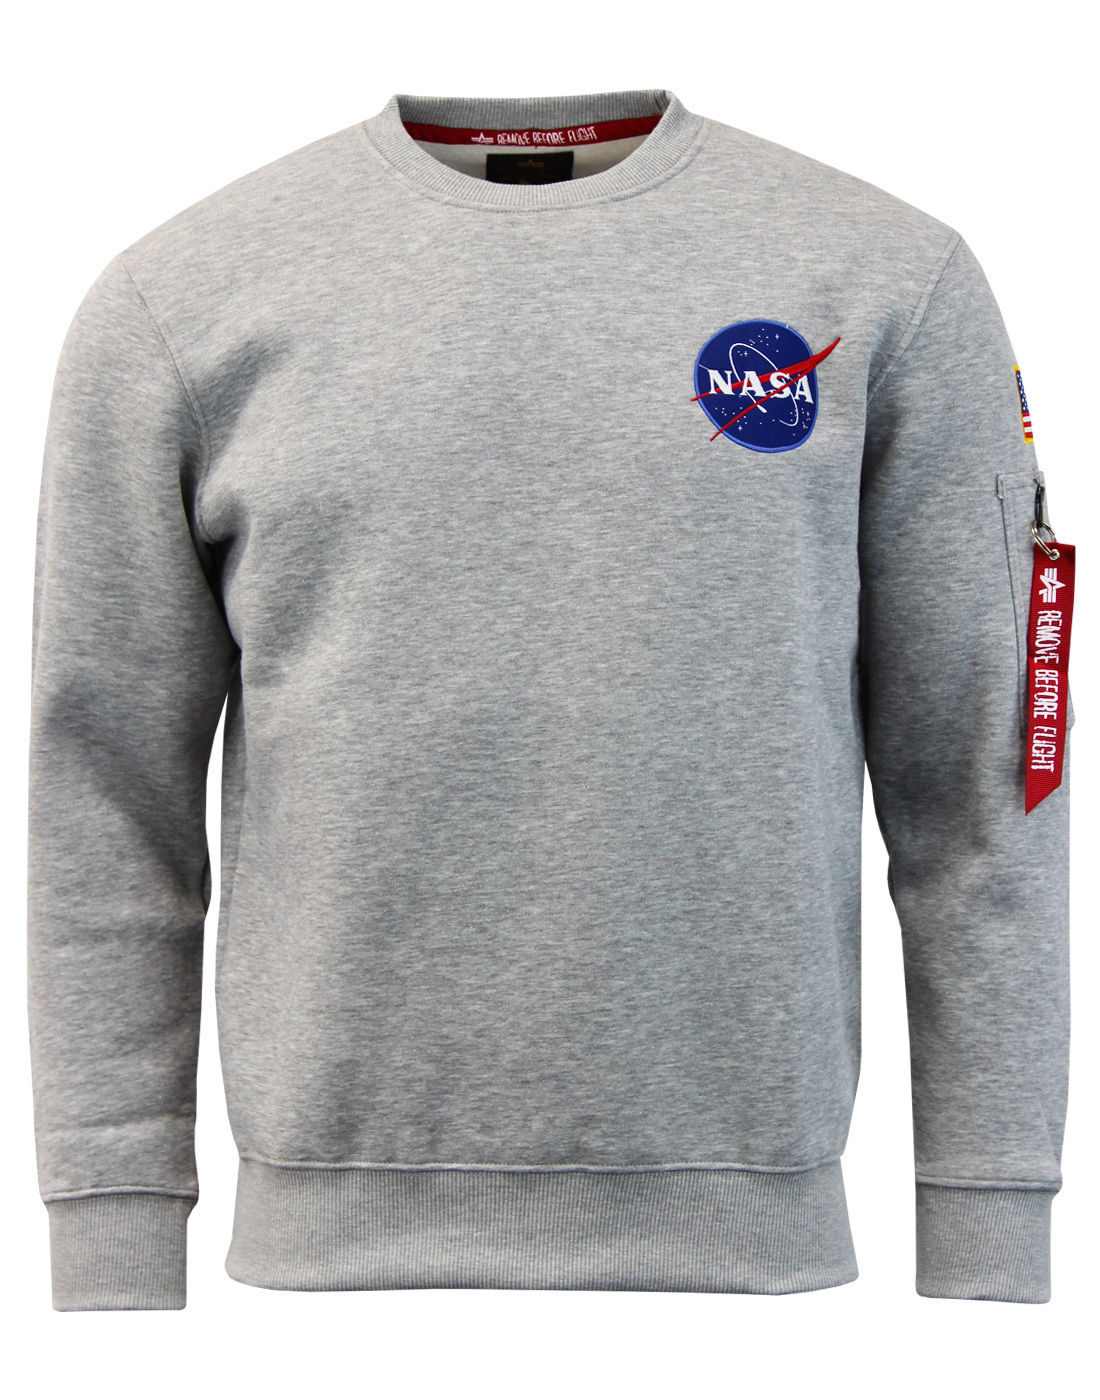 ALPHA INDUSTRIES NASA  Space Shuttle Retro 70s Sweatshirt 